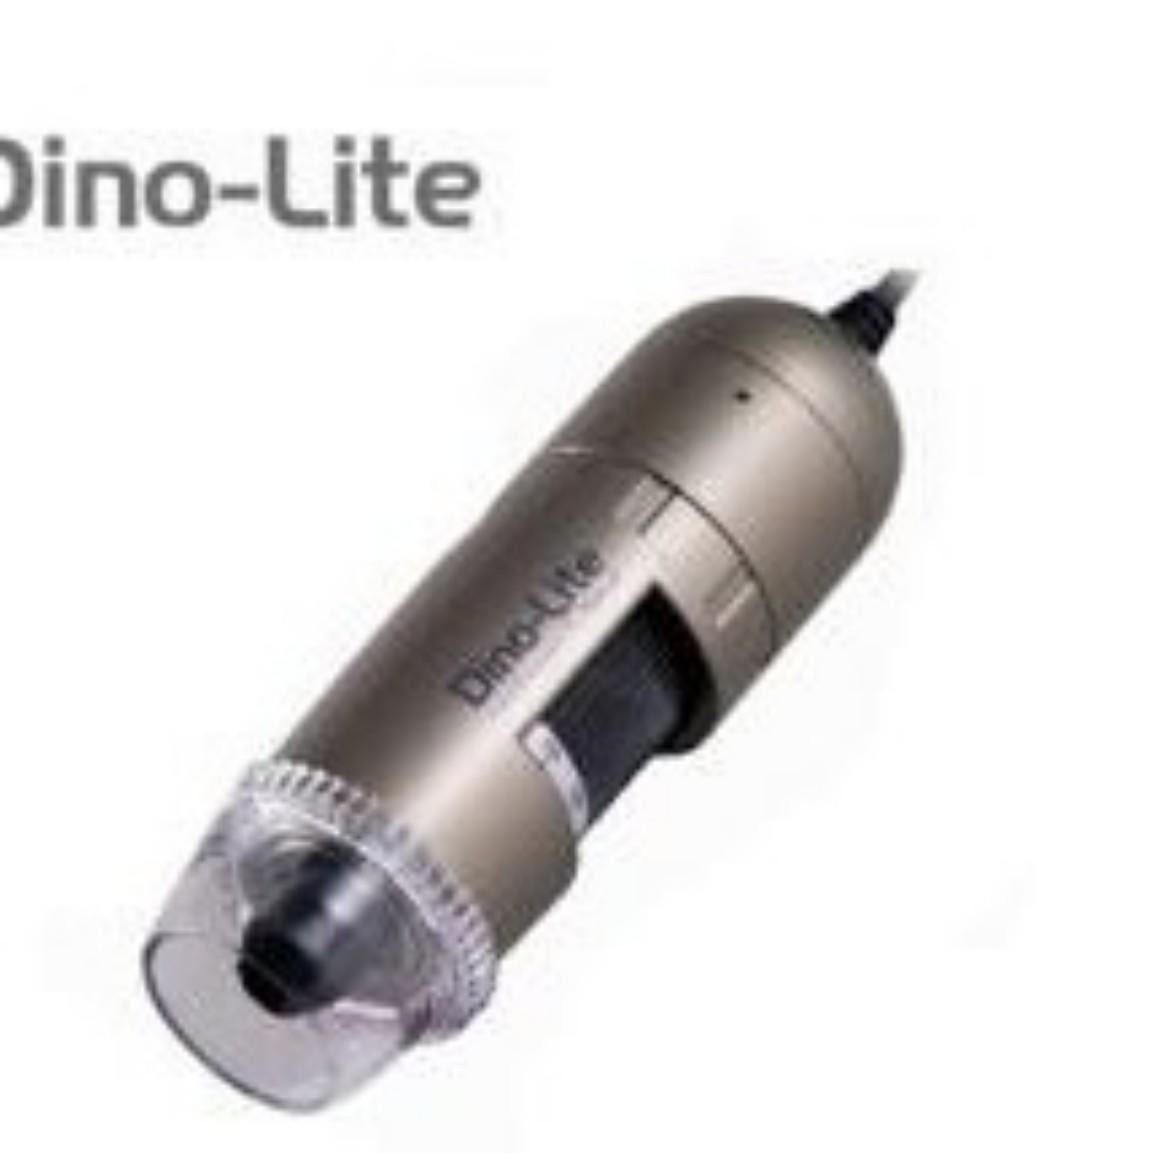 dino-lite 数码显微镜 AM4113ZT4 数码显微镜